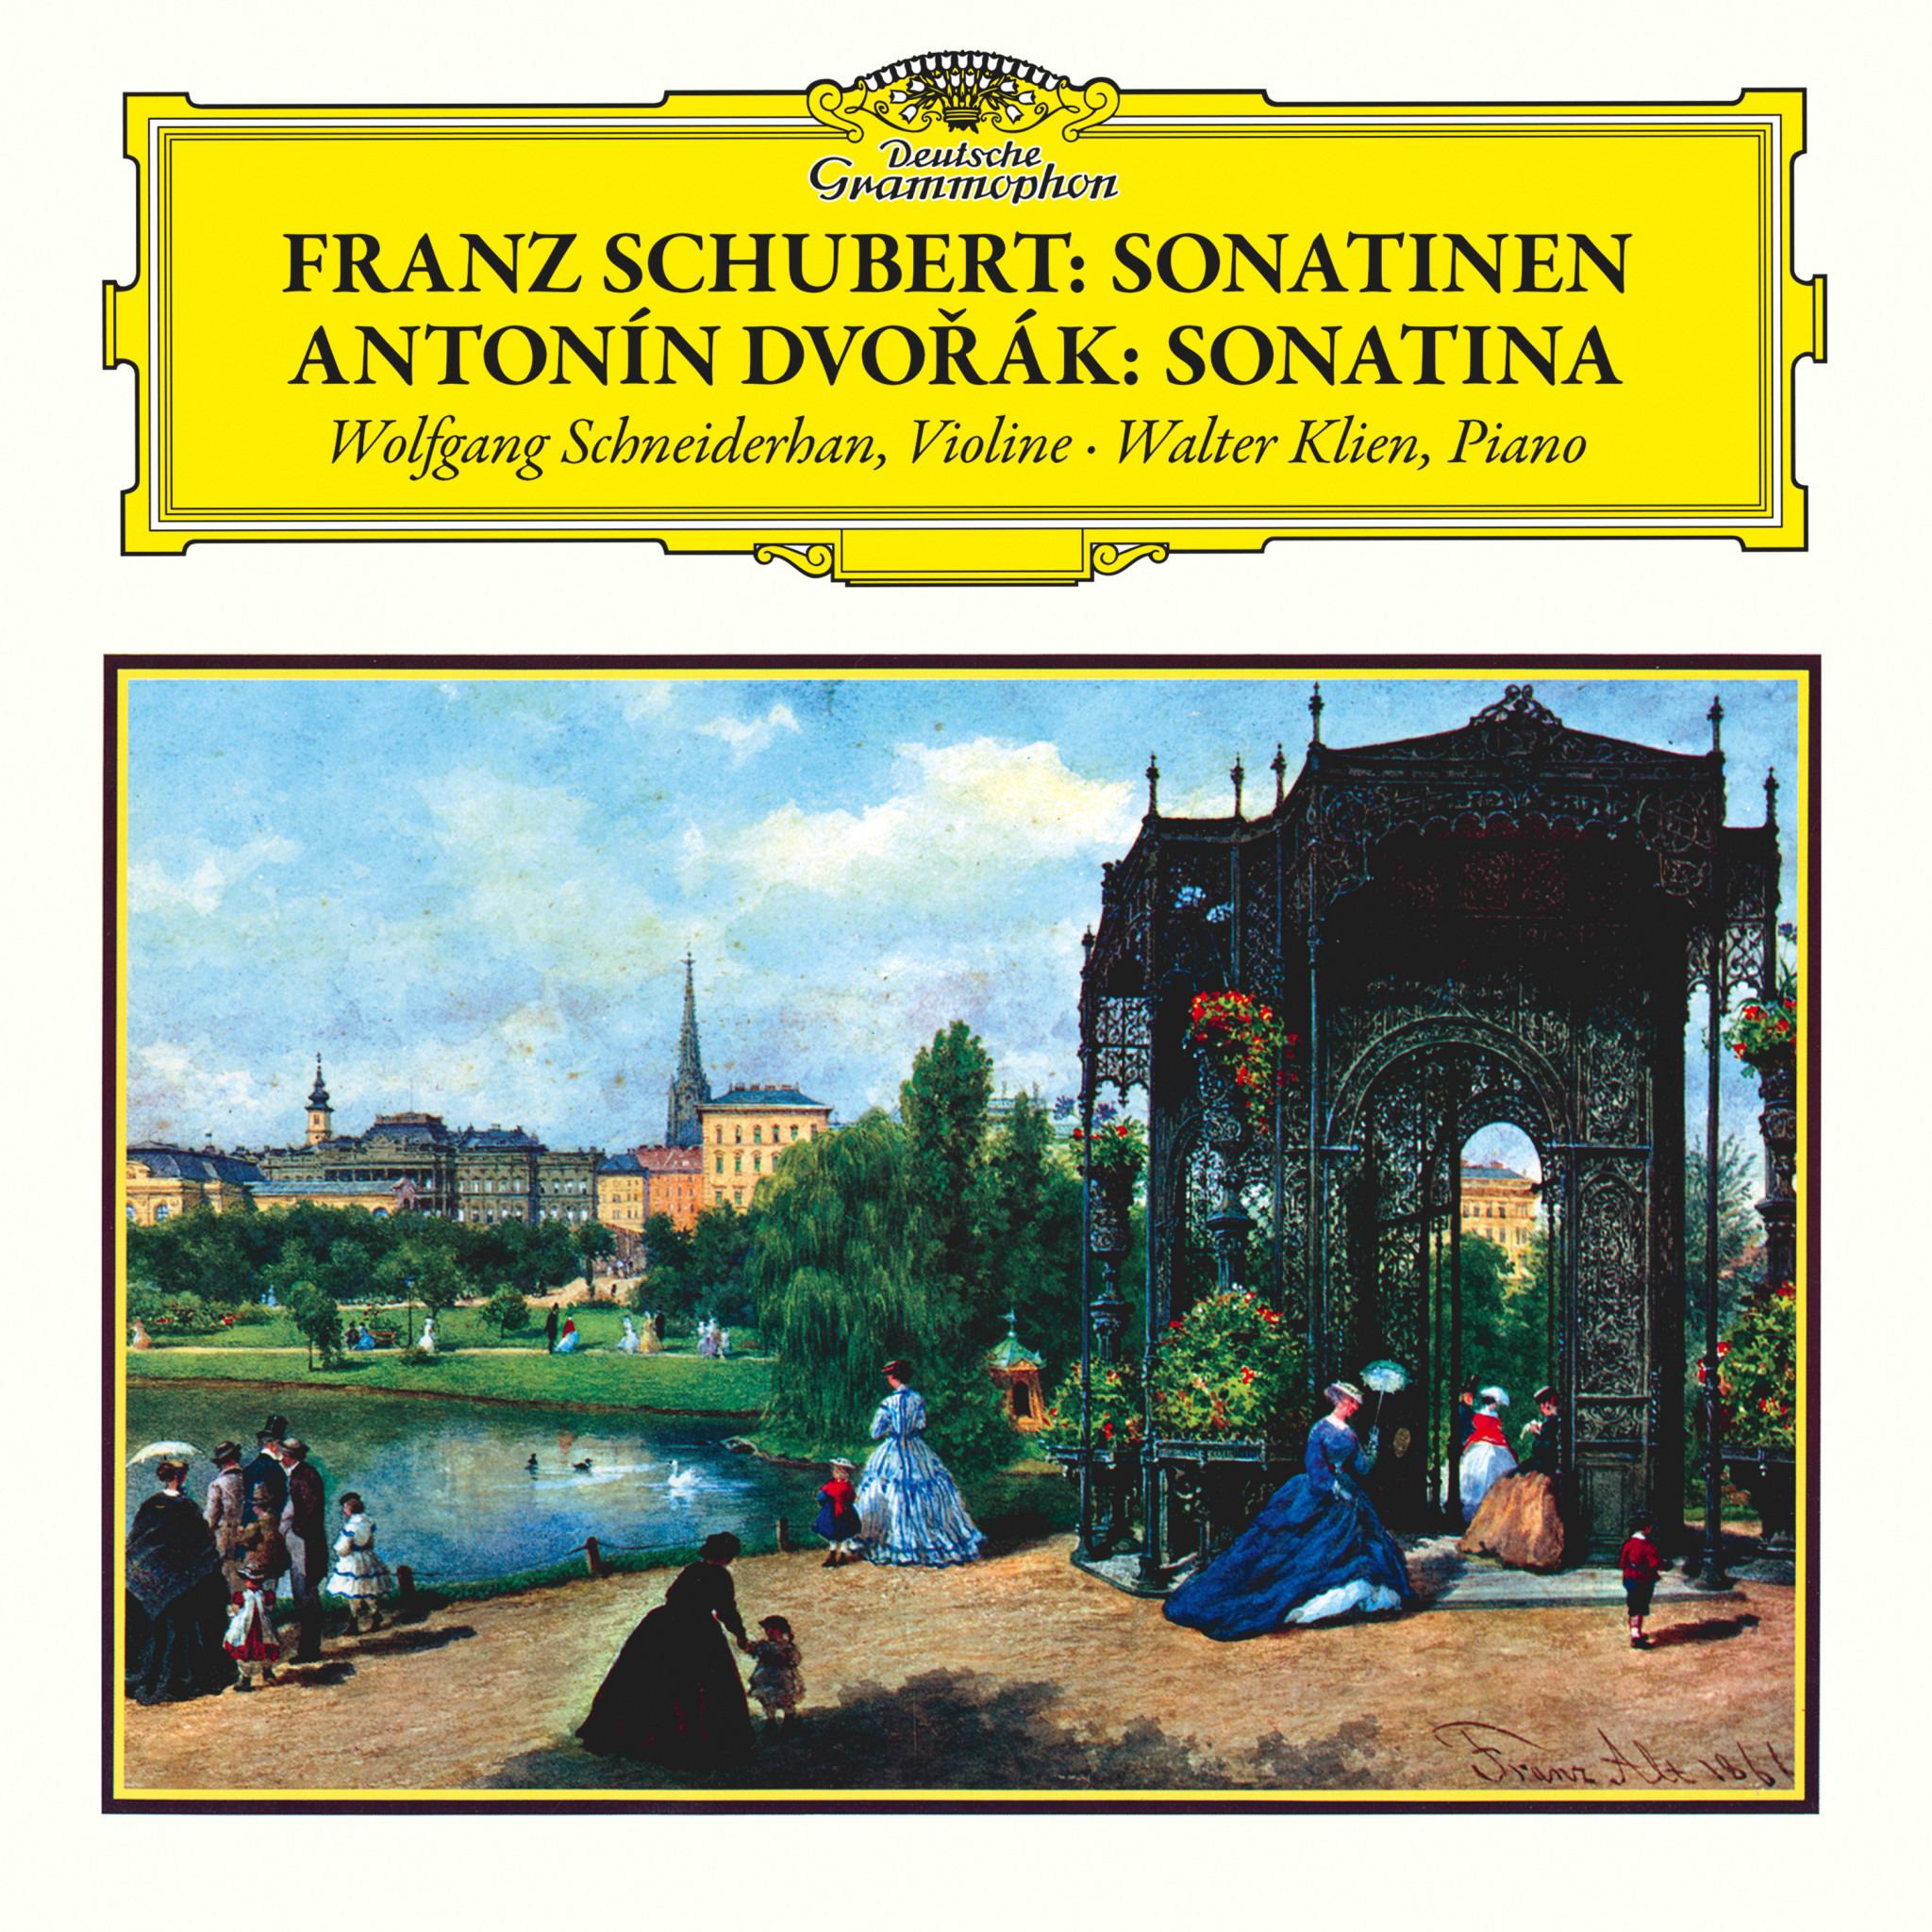 Wolfgang Schneiderhan - Schubert: Violin Sonatas D. 384 & D. 385, D. 408 / Dvořák: Violin Sonatina in G Major, Op. 100, B. 120